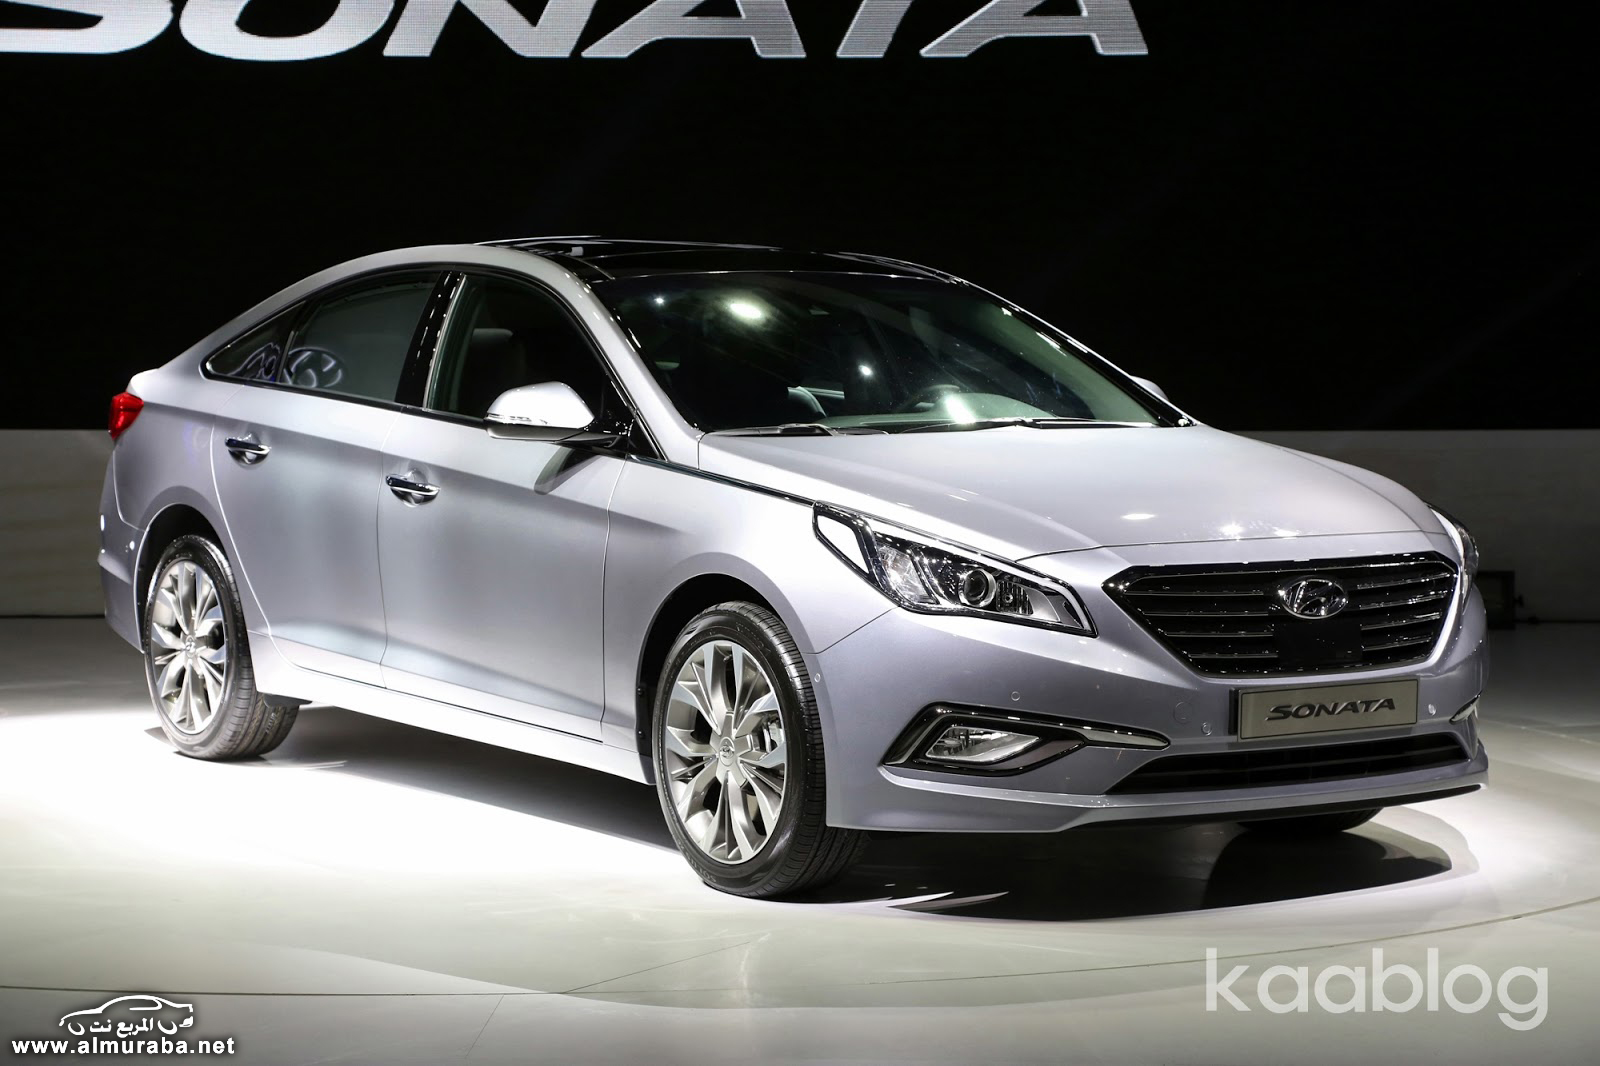 2015-Hyundai-Sonata-KDM-Carscoops1